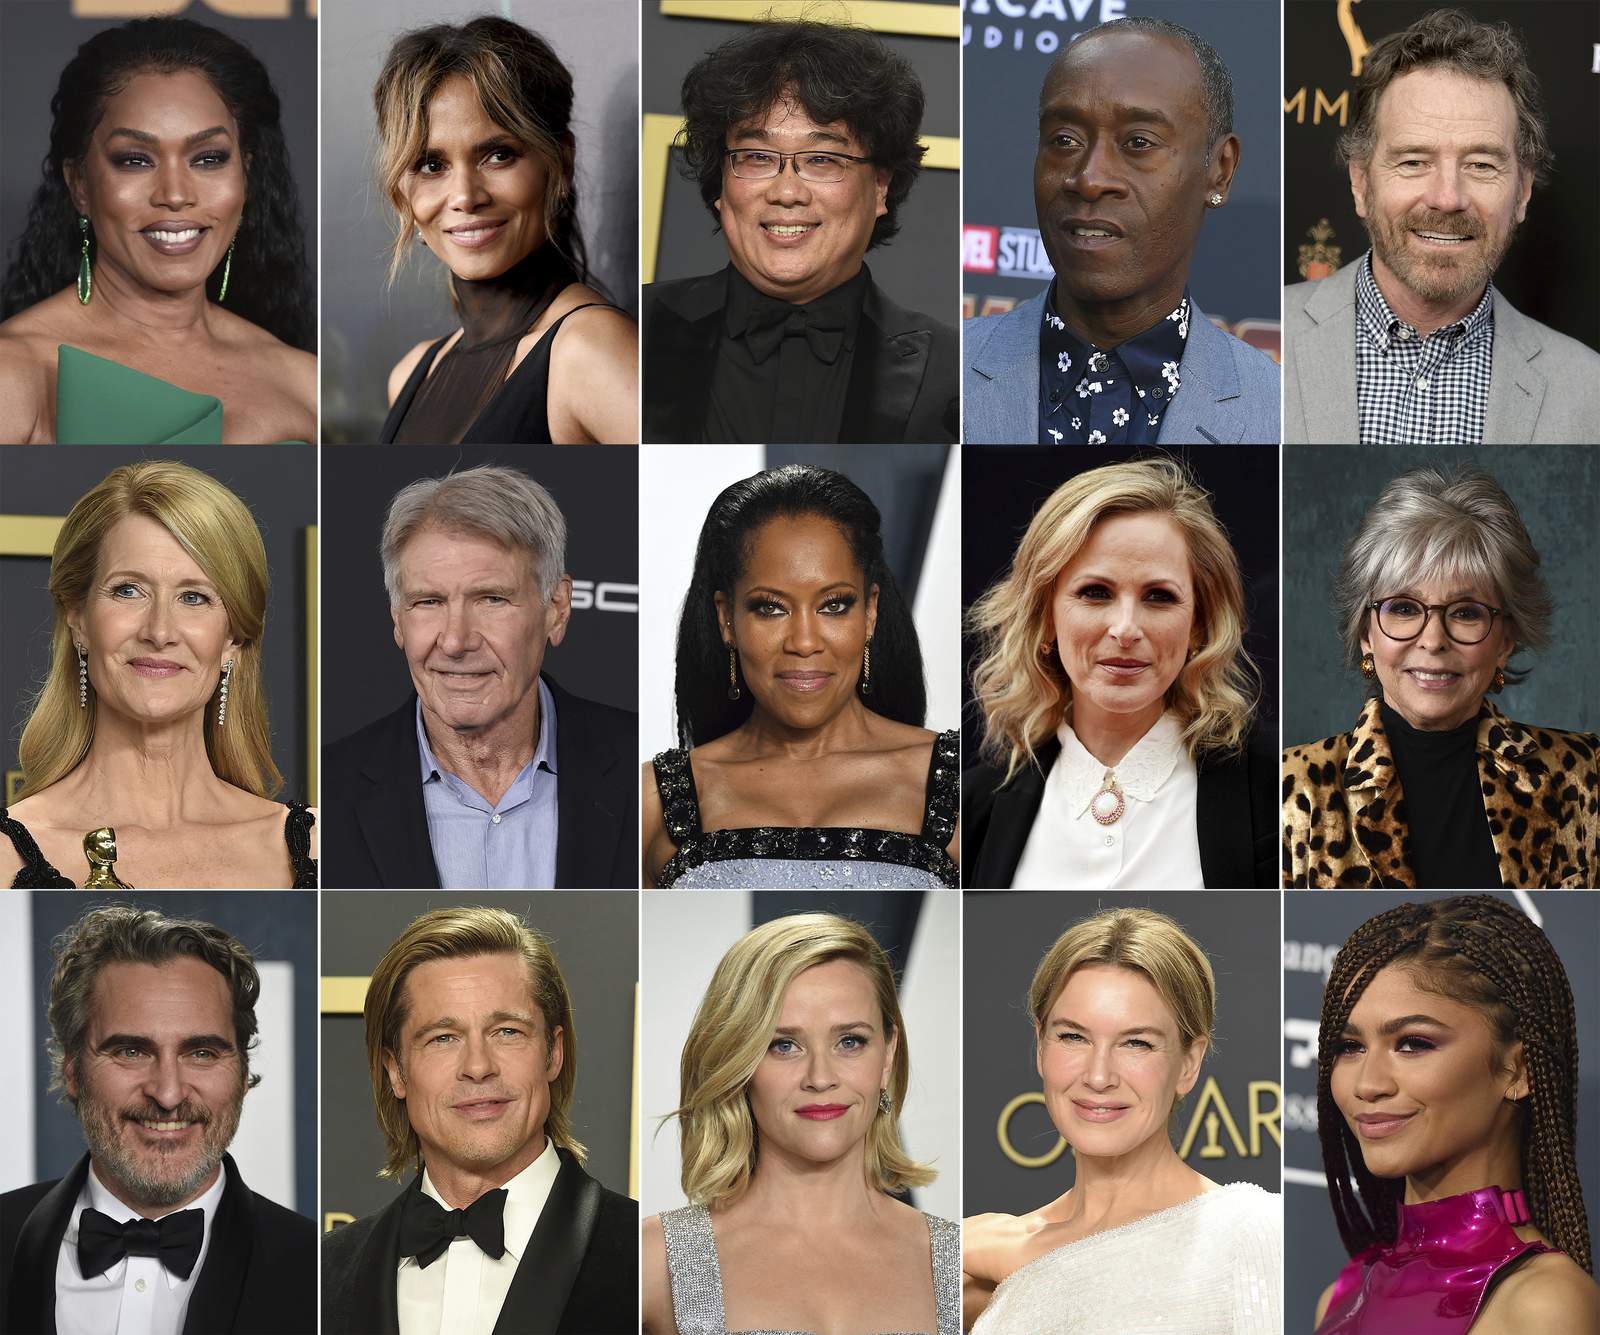 Harrison Ford, Brad Pitt join Oscars starry presenting cast